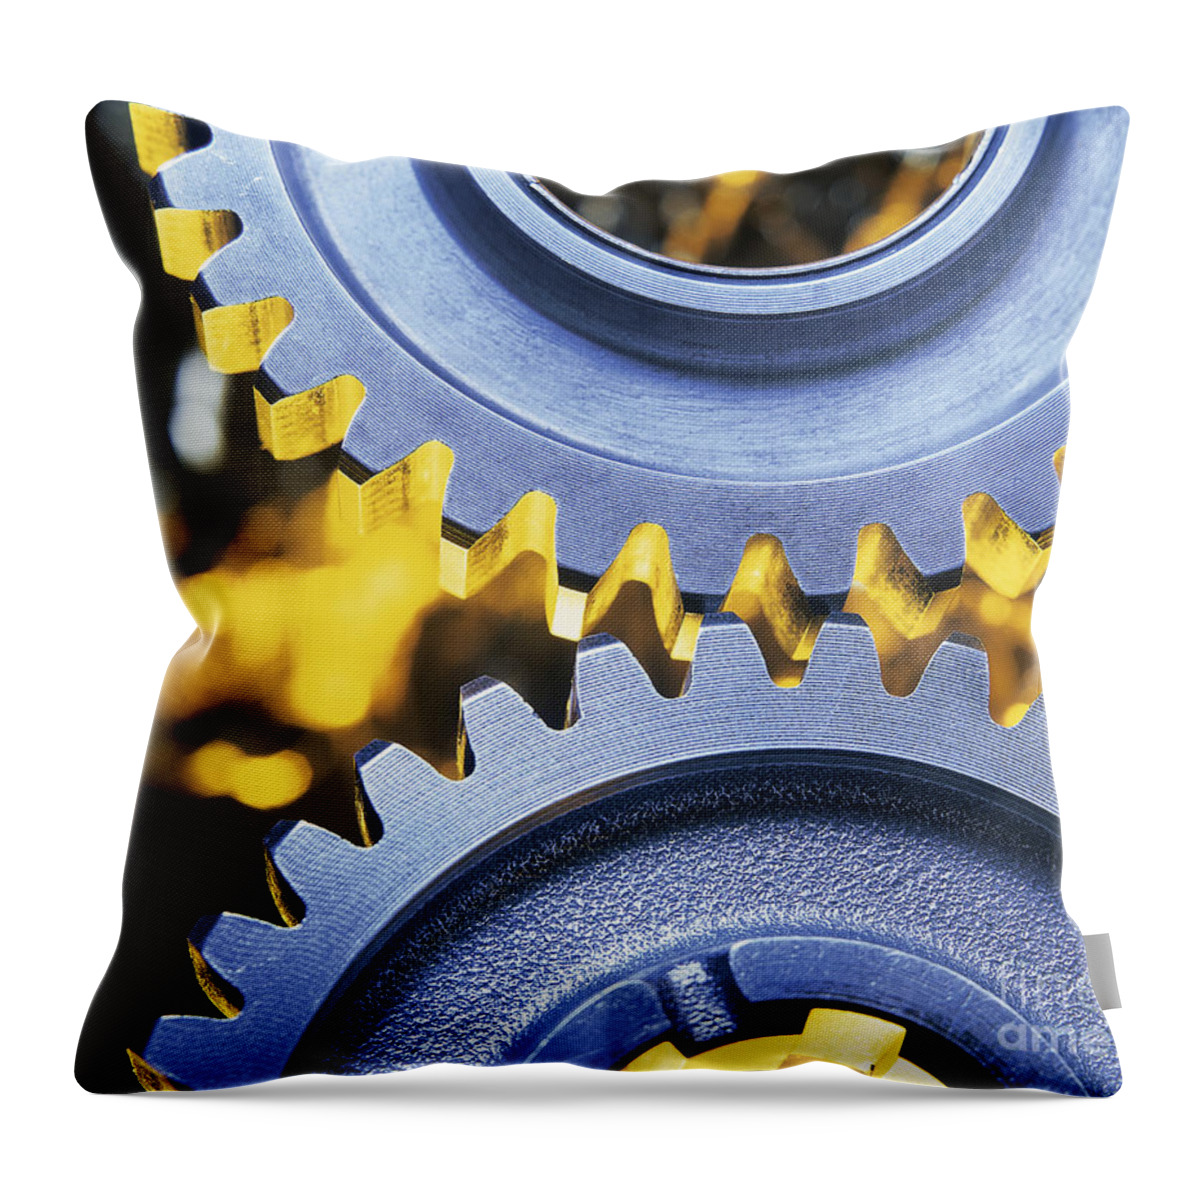 Wheel Throw Pillow featuring the photograph Gear Cogwheels by Terry Why/Tierbild Okapia